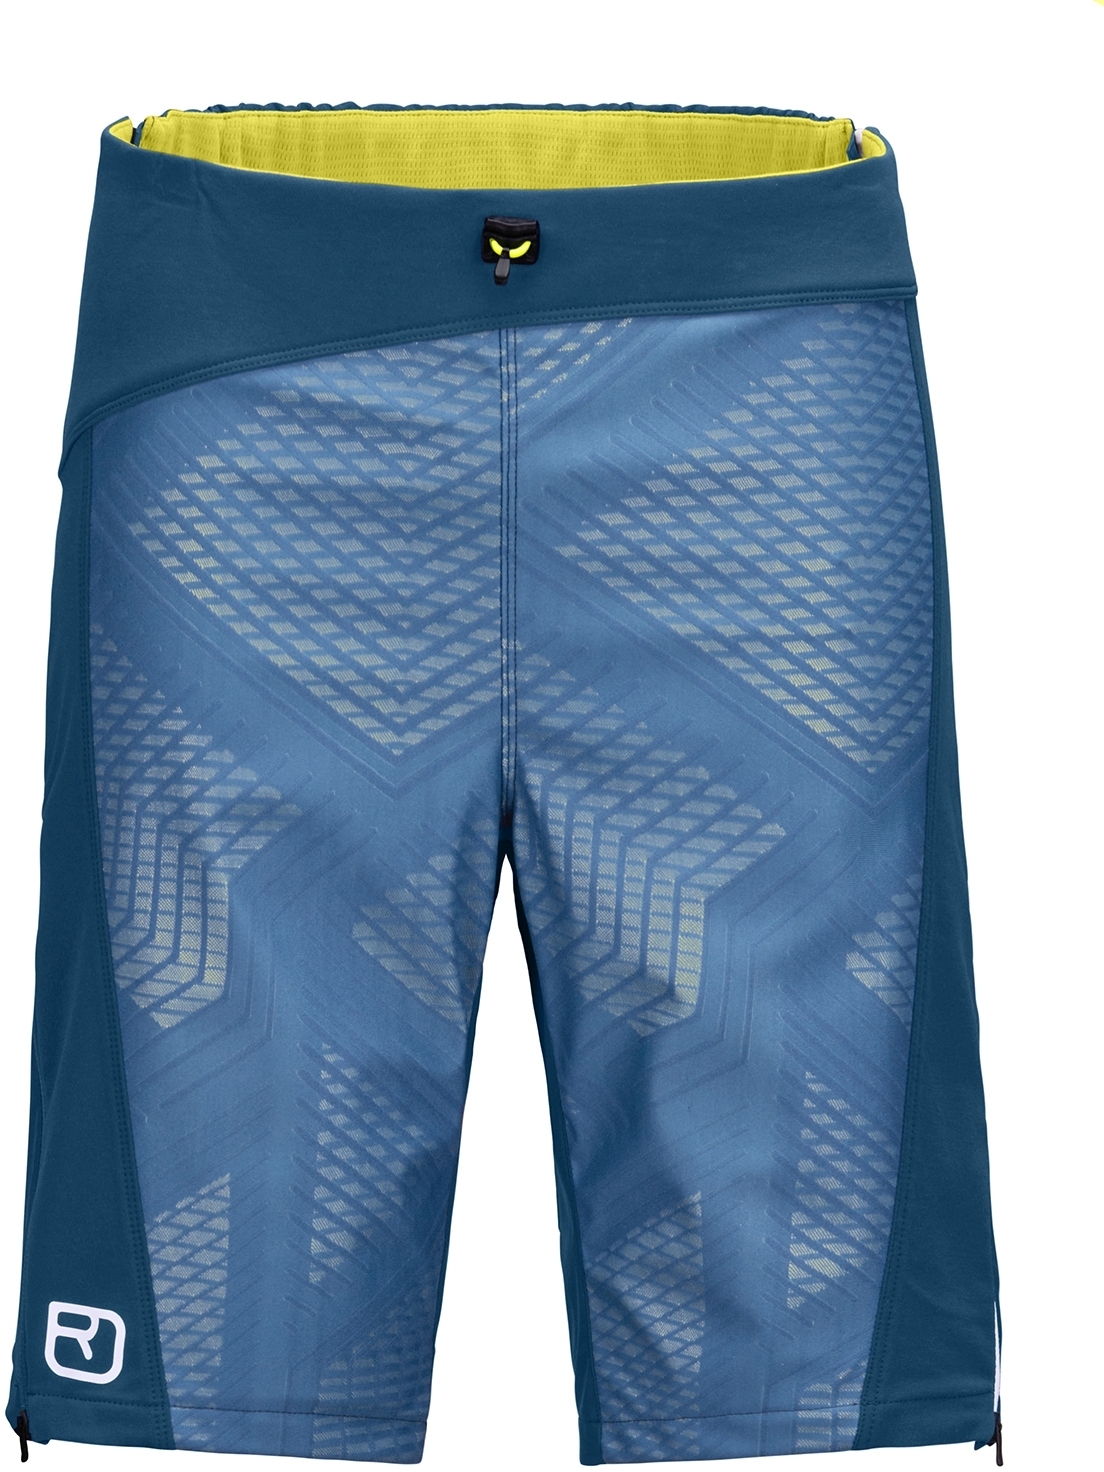 E-shop Ortovox Col becchei wb shorts m - petrol blue S